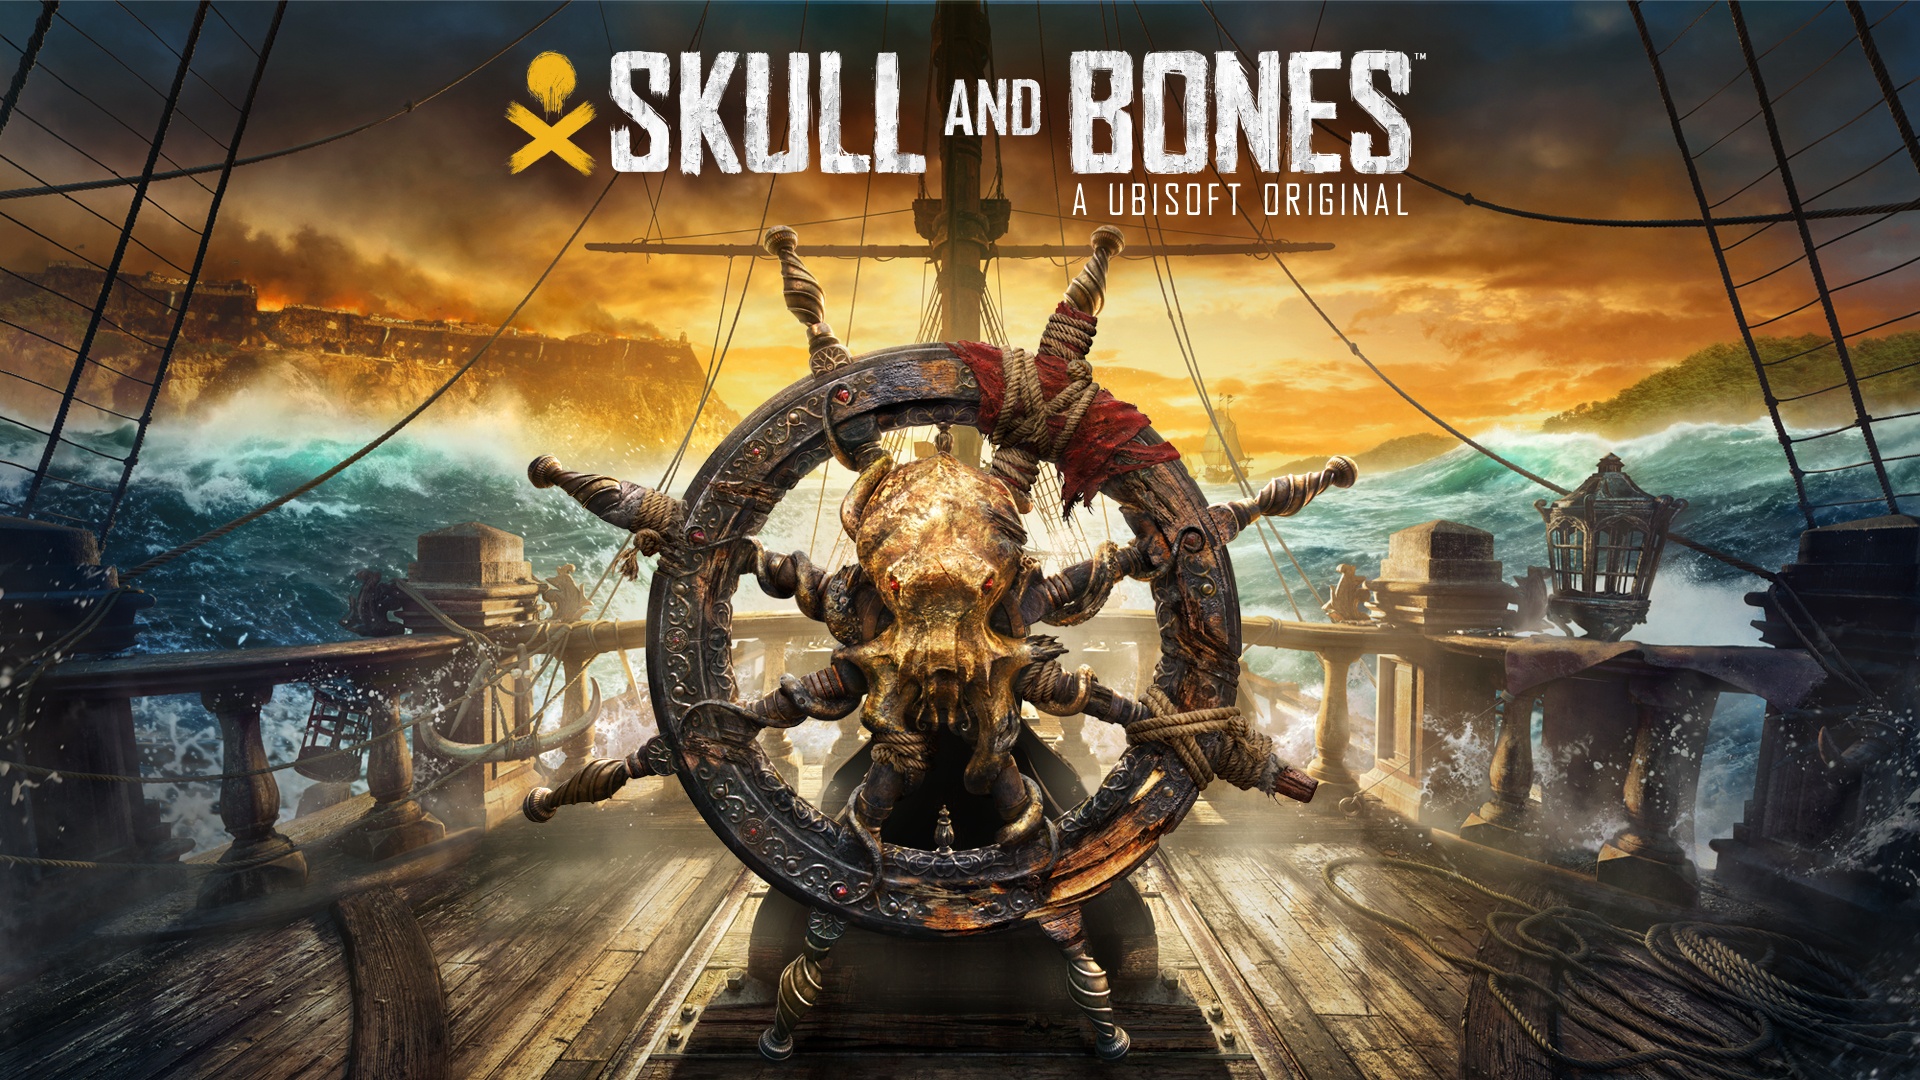 SAB UCS26829 BannerAd 1920x1080 1 23c18f4c813ac71b2736 Ubisoft Forward: Skull and Bones Previews Ship Customization and Smuggling Networks